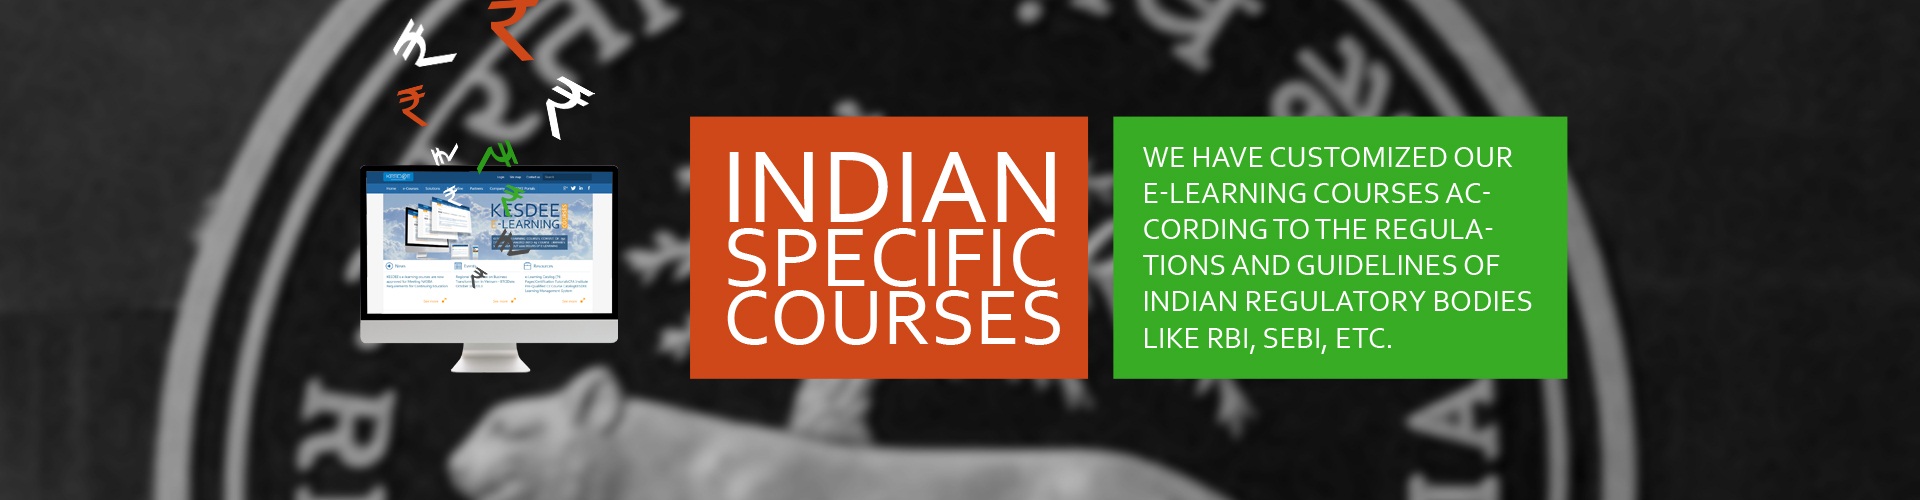 kesdee india specific courses